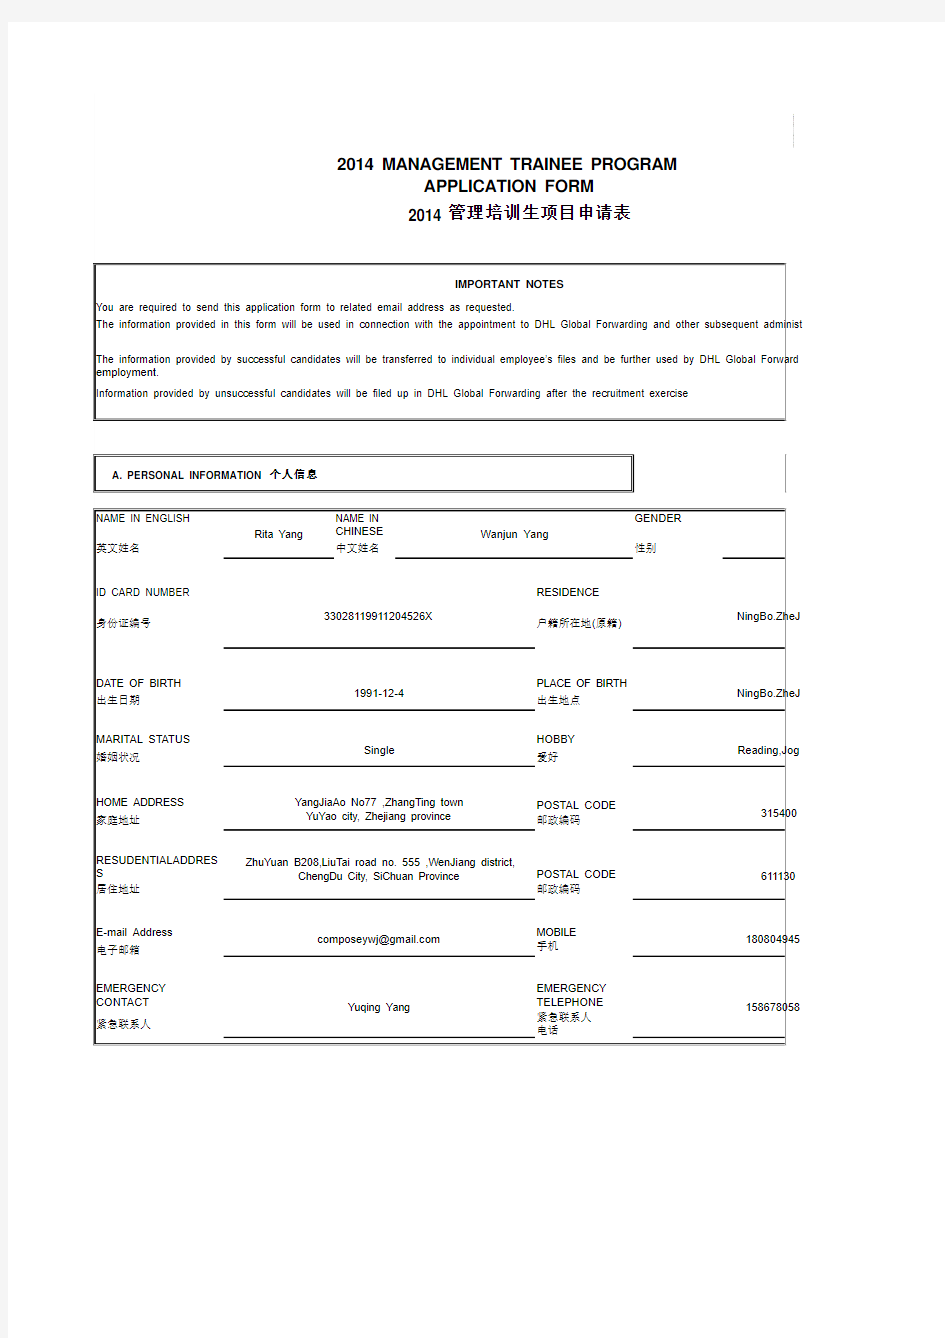 DHL2014管理培训生申请表2014 DHL MT Application Form (non-SHA)